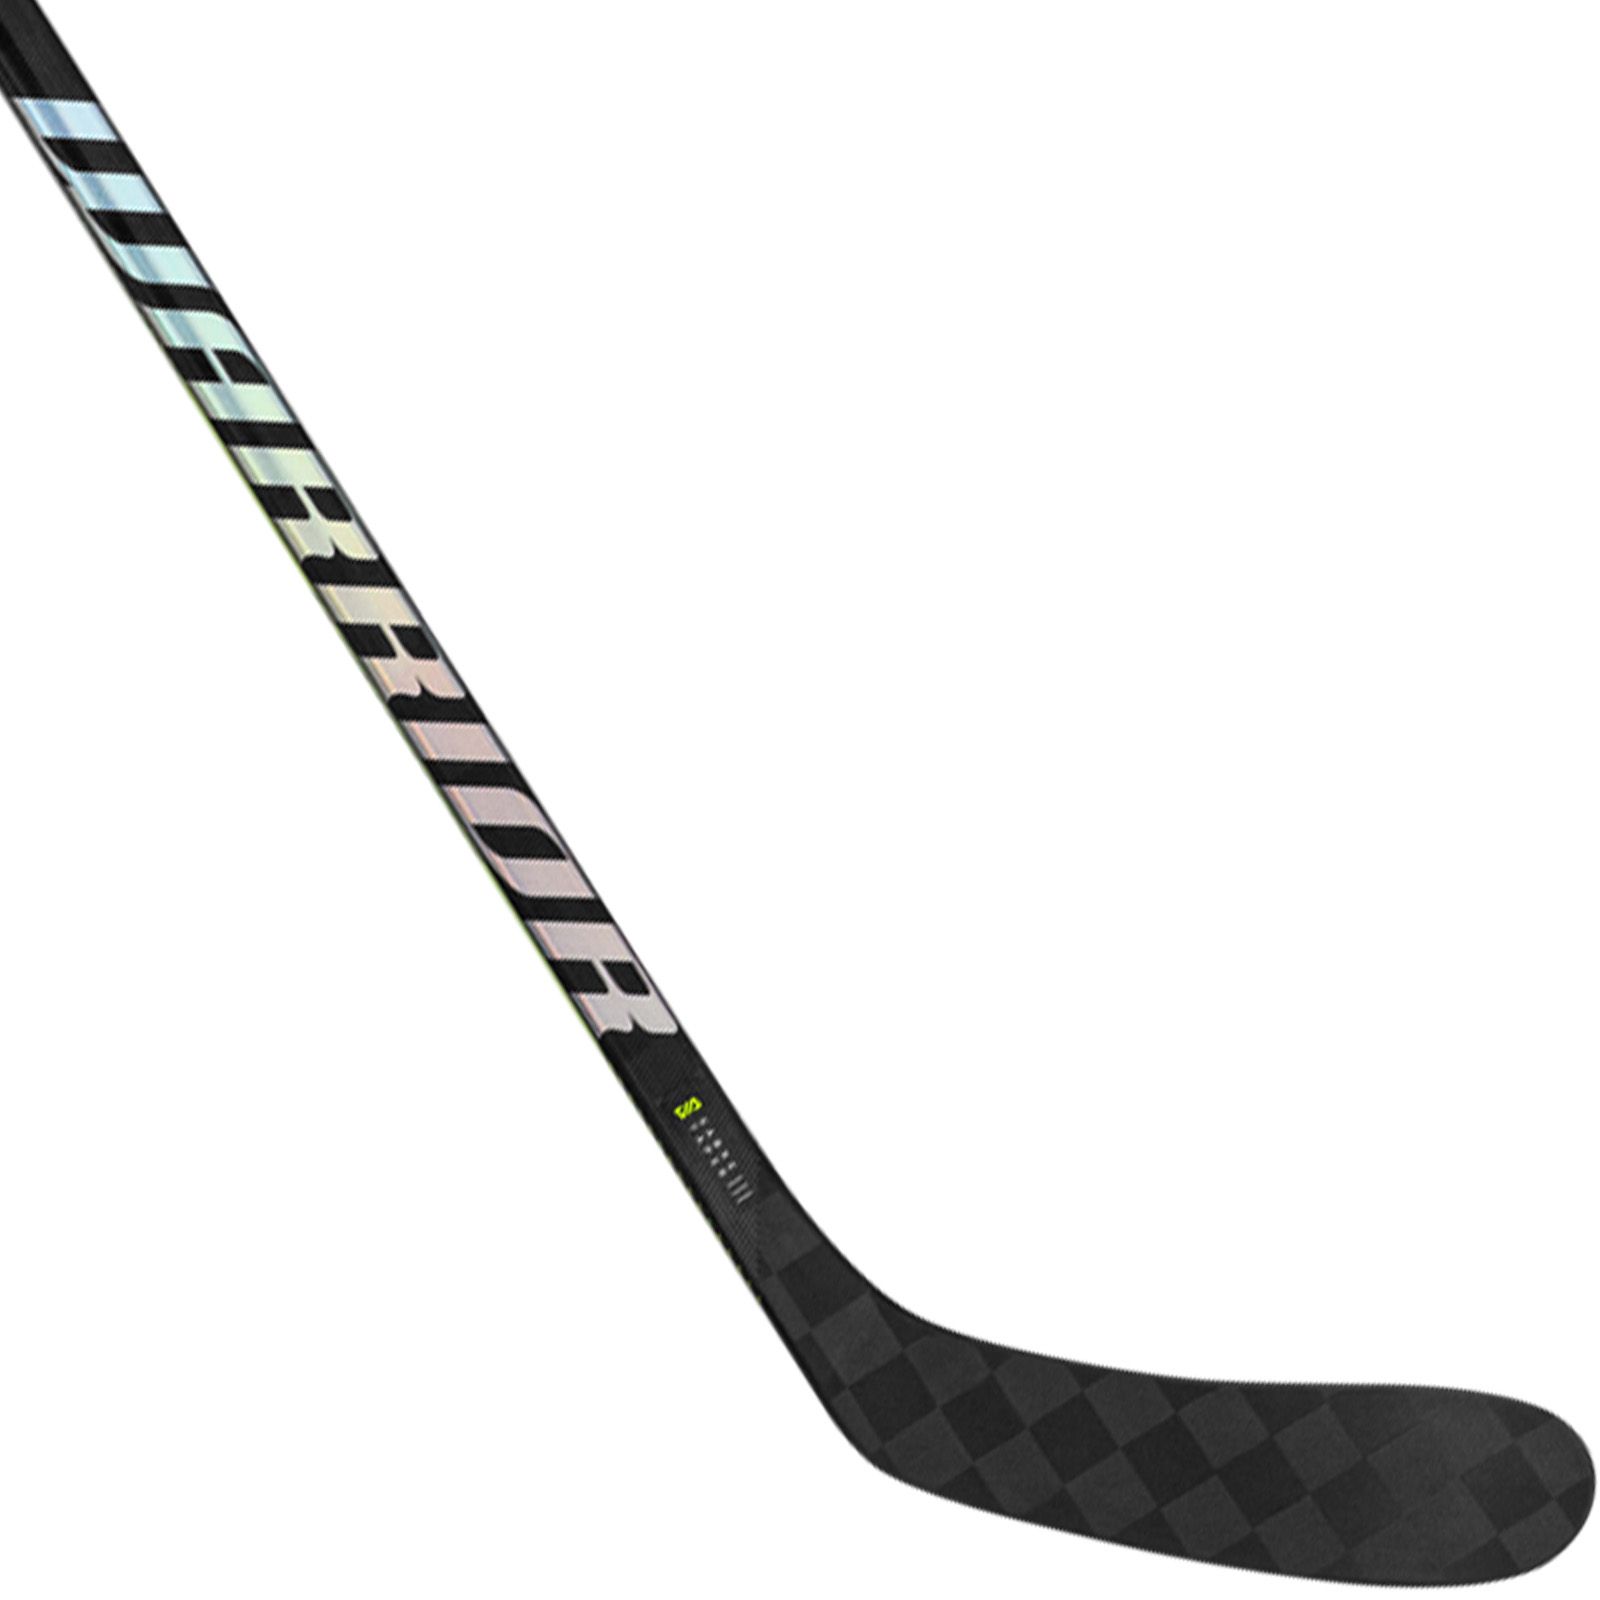 Warrior Alpha LX2 Pro Ice Hockey Stick (63 Inch) - Senior